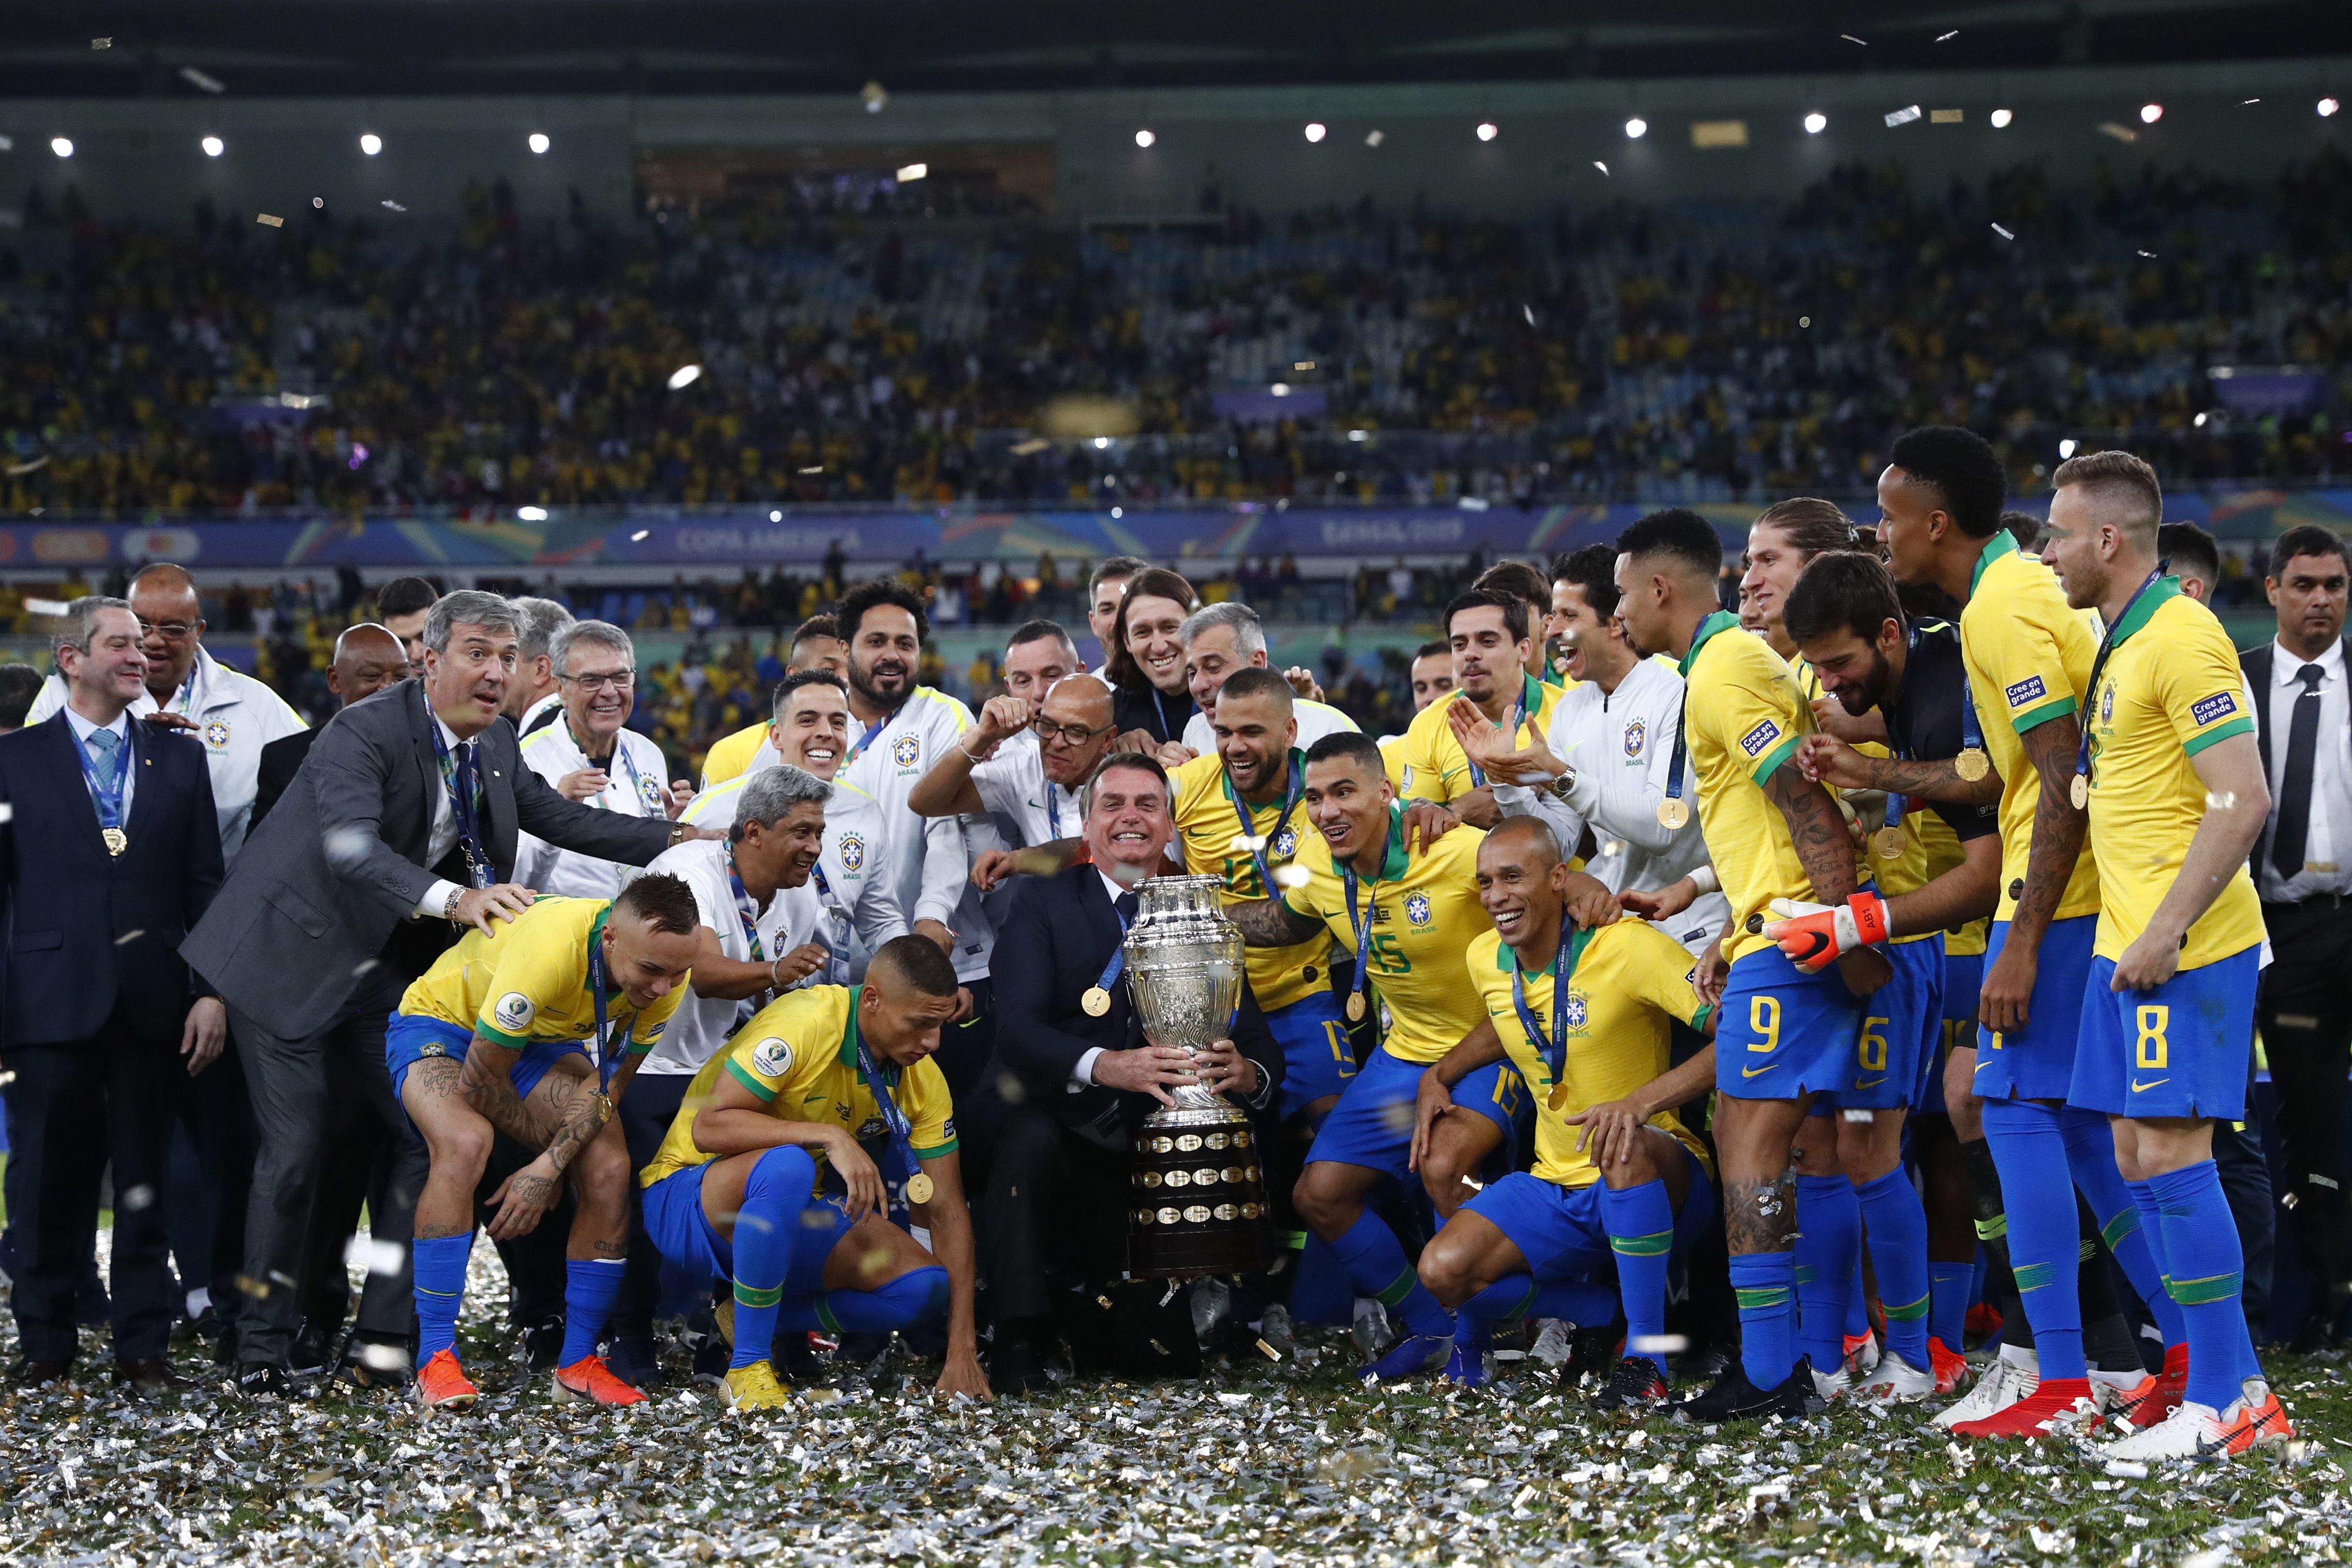 Brazil – Soccer Politics / The Politics of Football